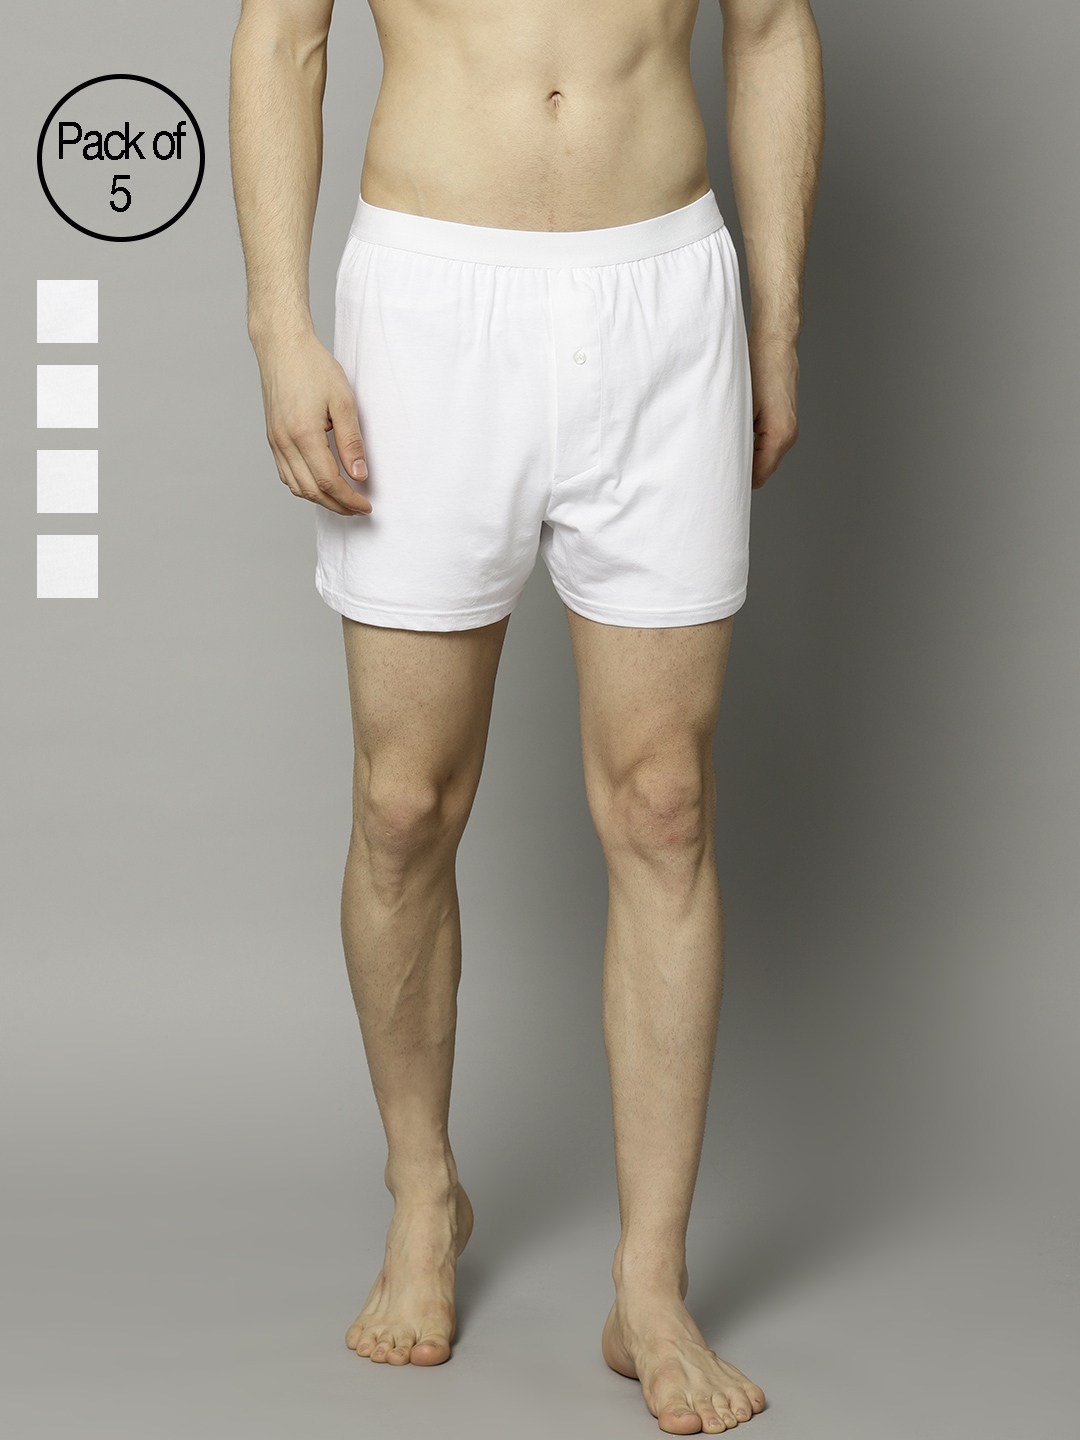 Men's Boxer Brief 5-Pack, Men's Underwear & Socks